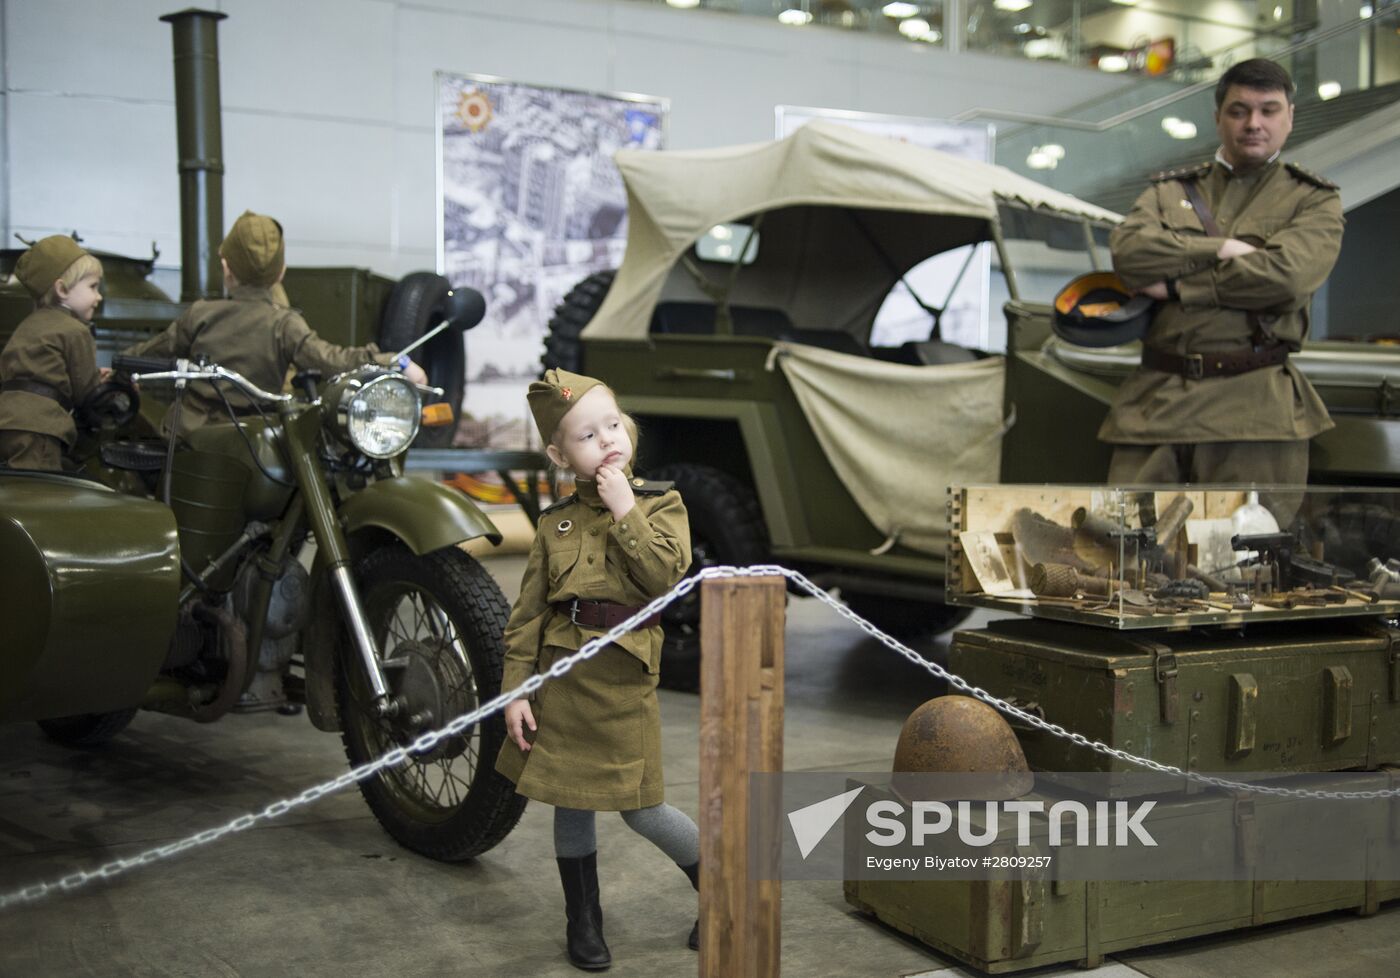 War Motors international exhibition of historical military equipment